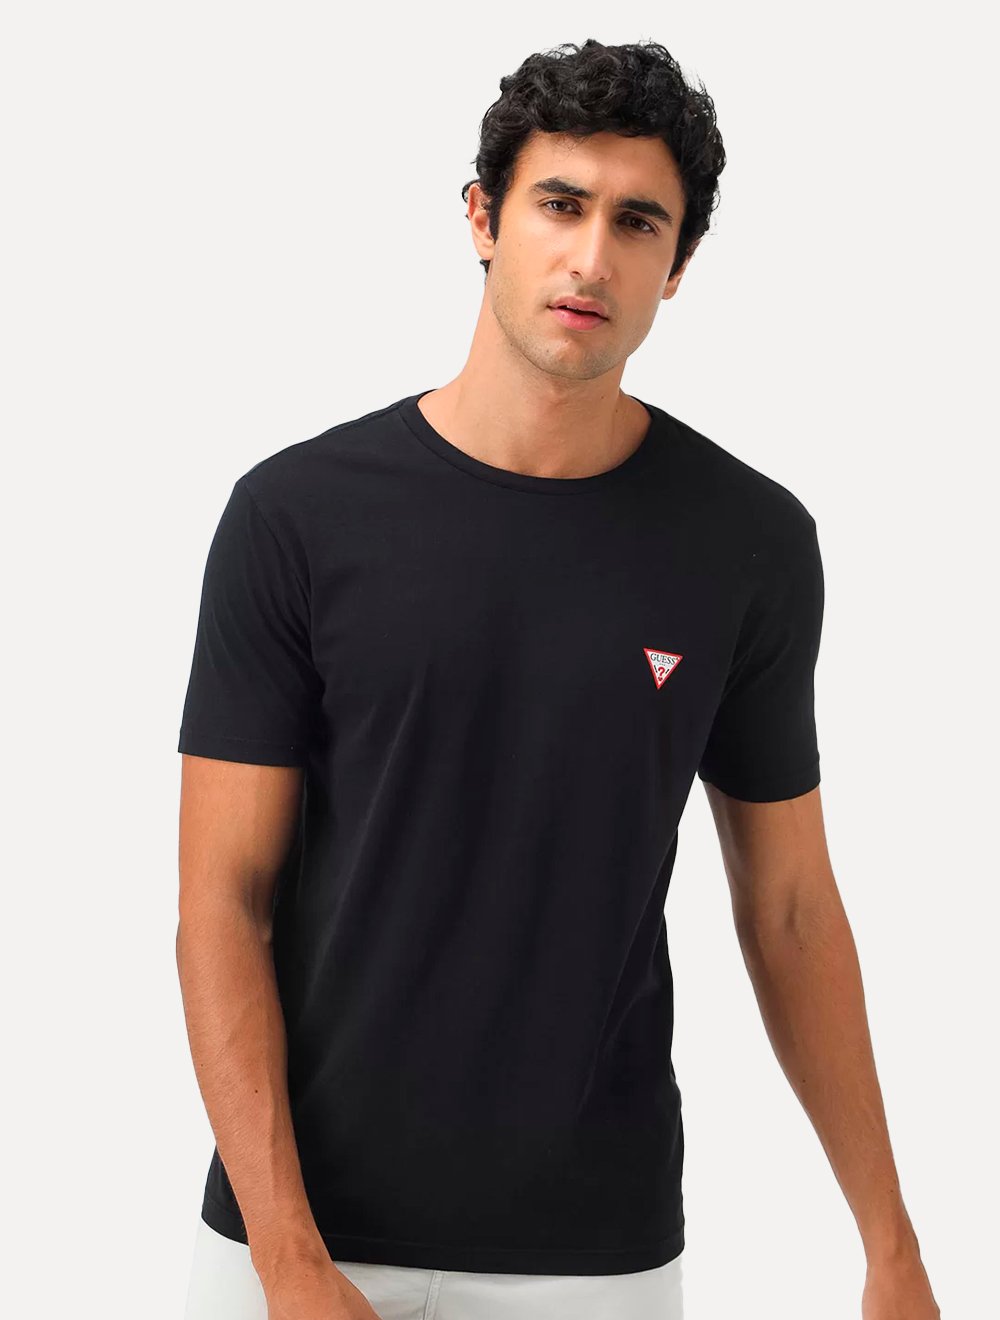 Camiseta Guess Masculina Original Small Triangle Preta